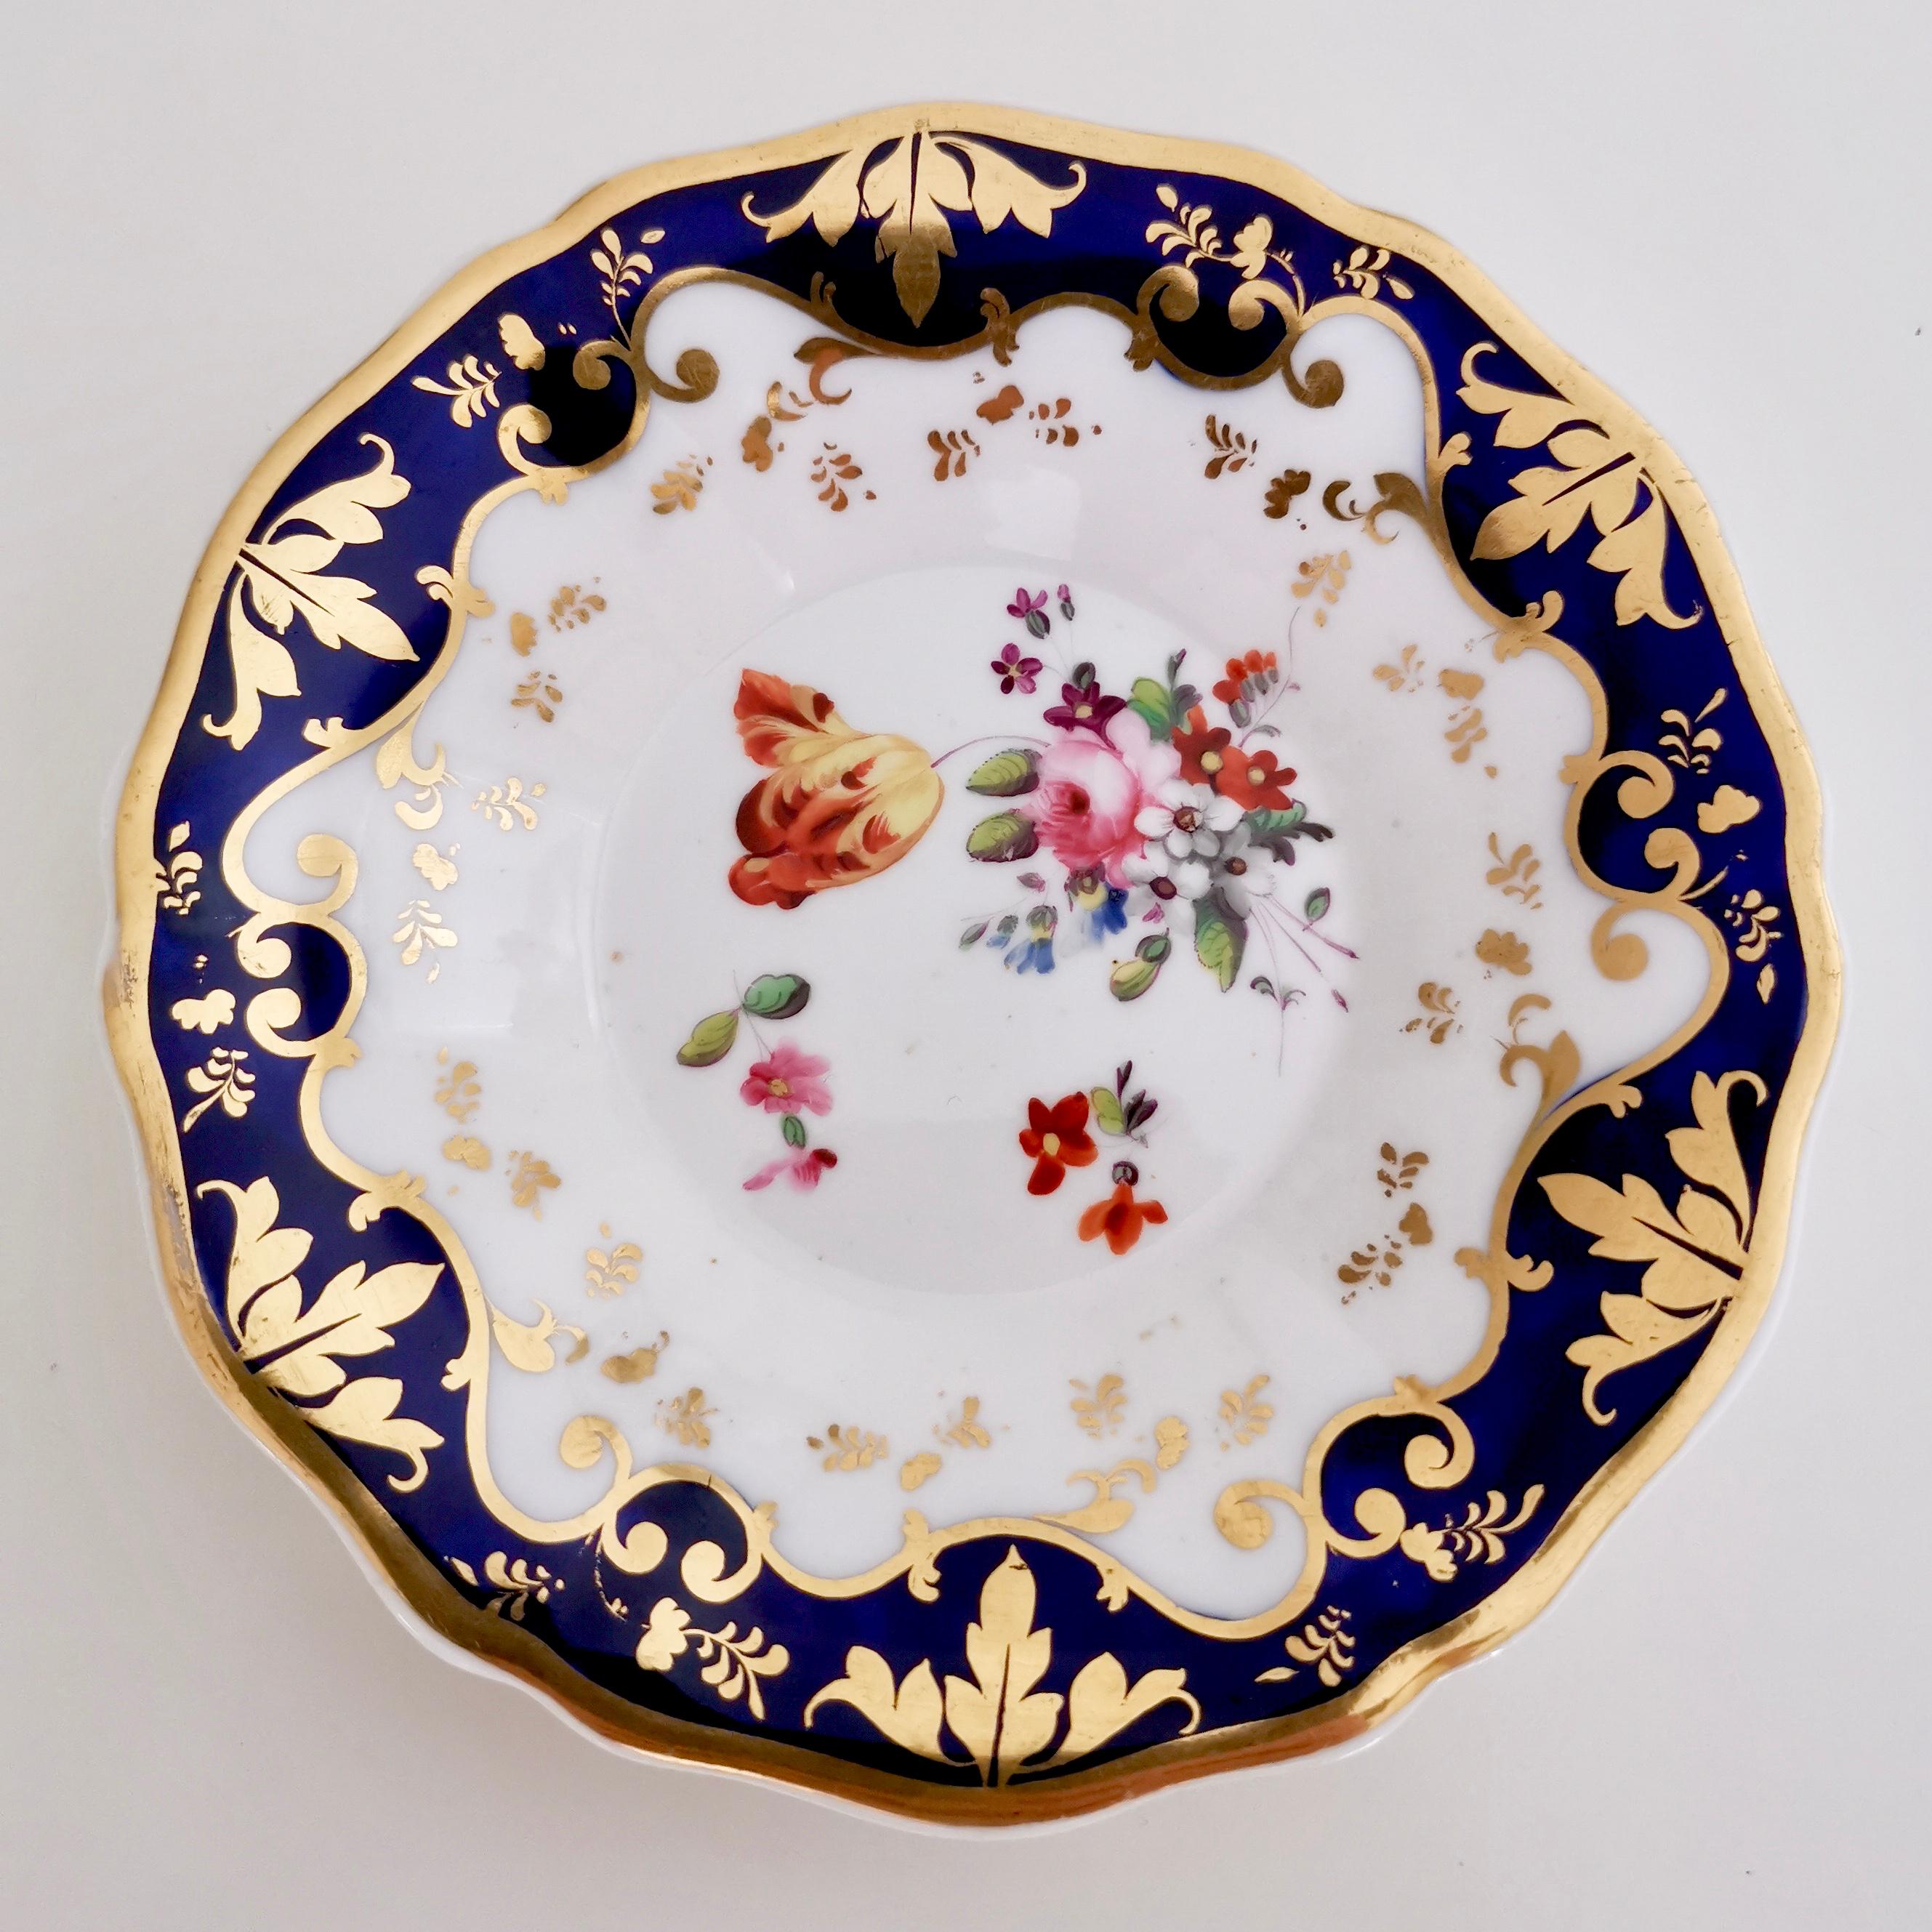 English Porcelain Teacup by Ridgway, Gilt, Cobalt Blue and Flowers, Regency, 1820-1825